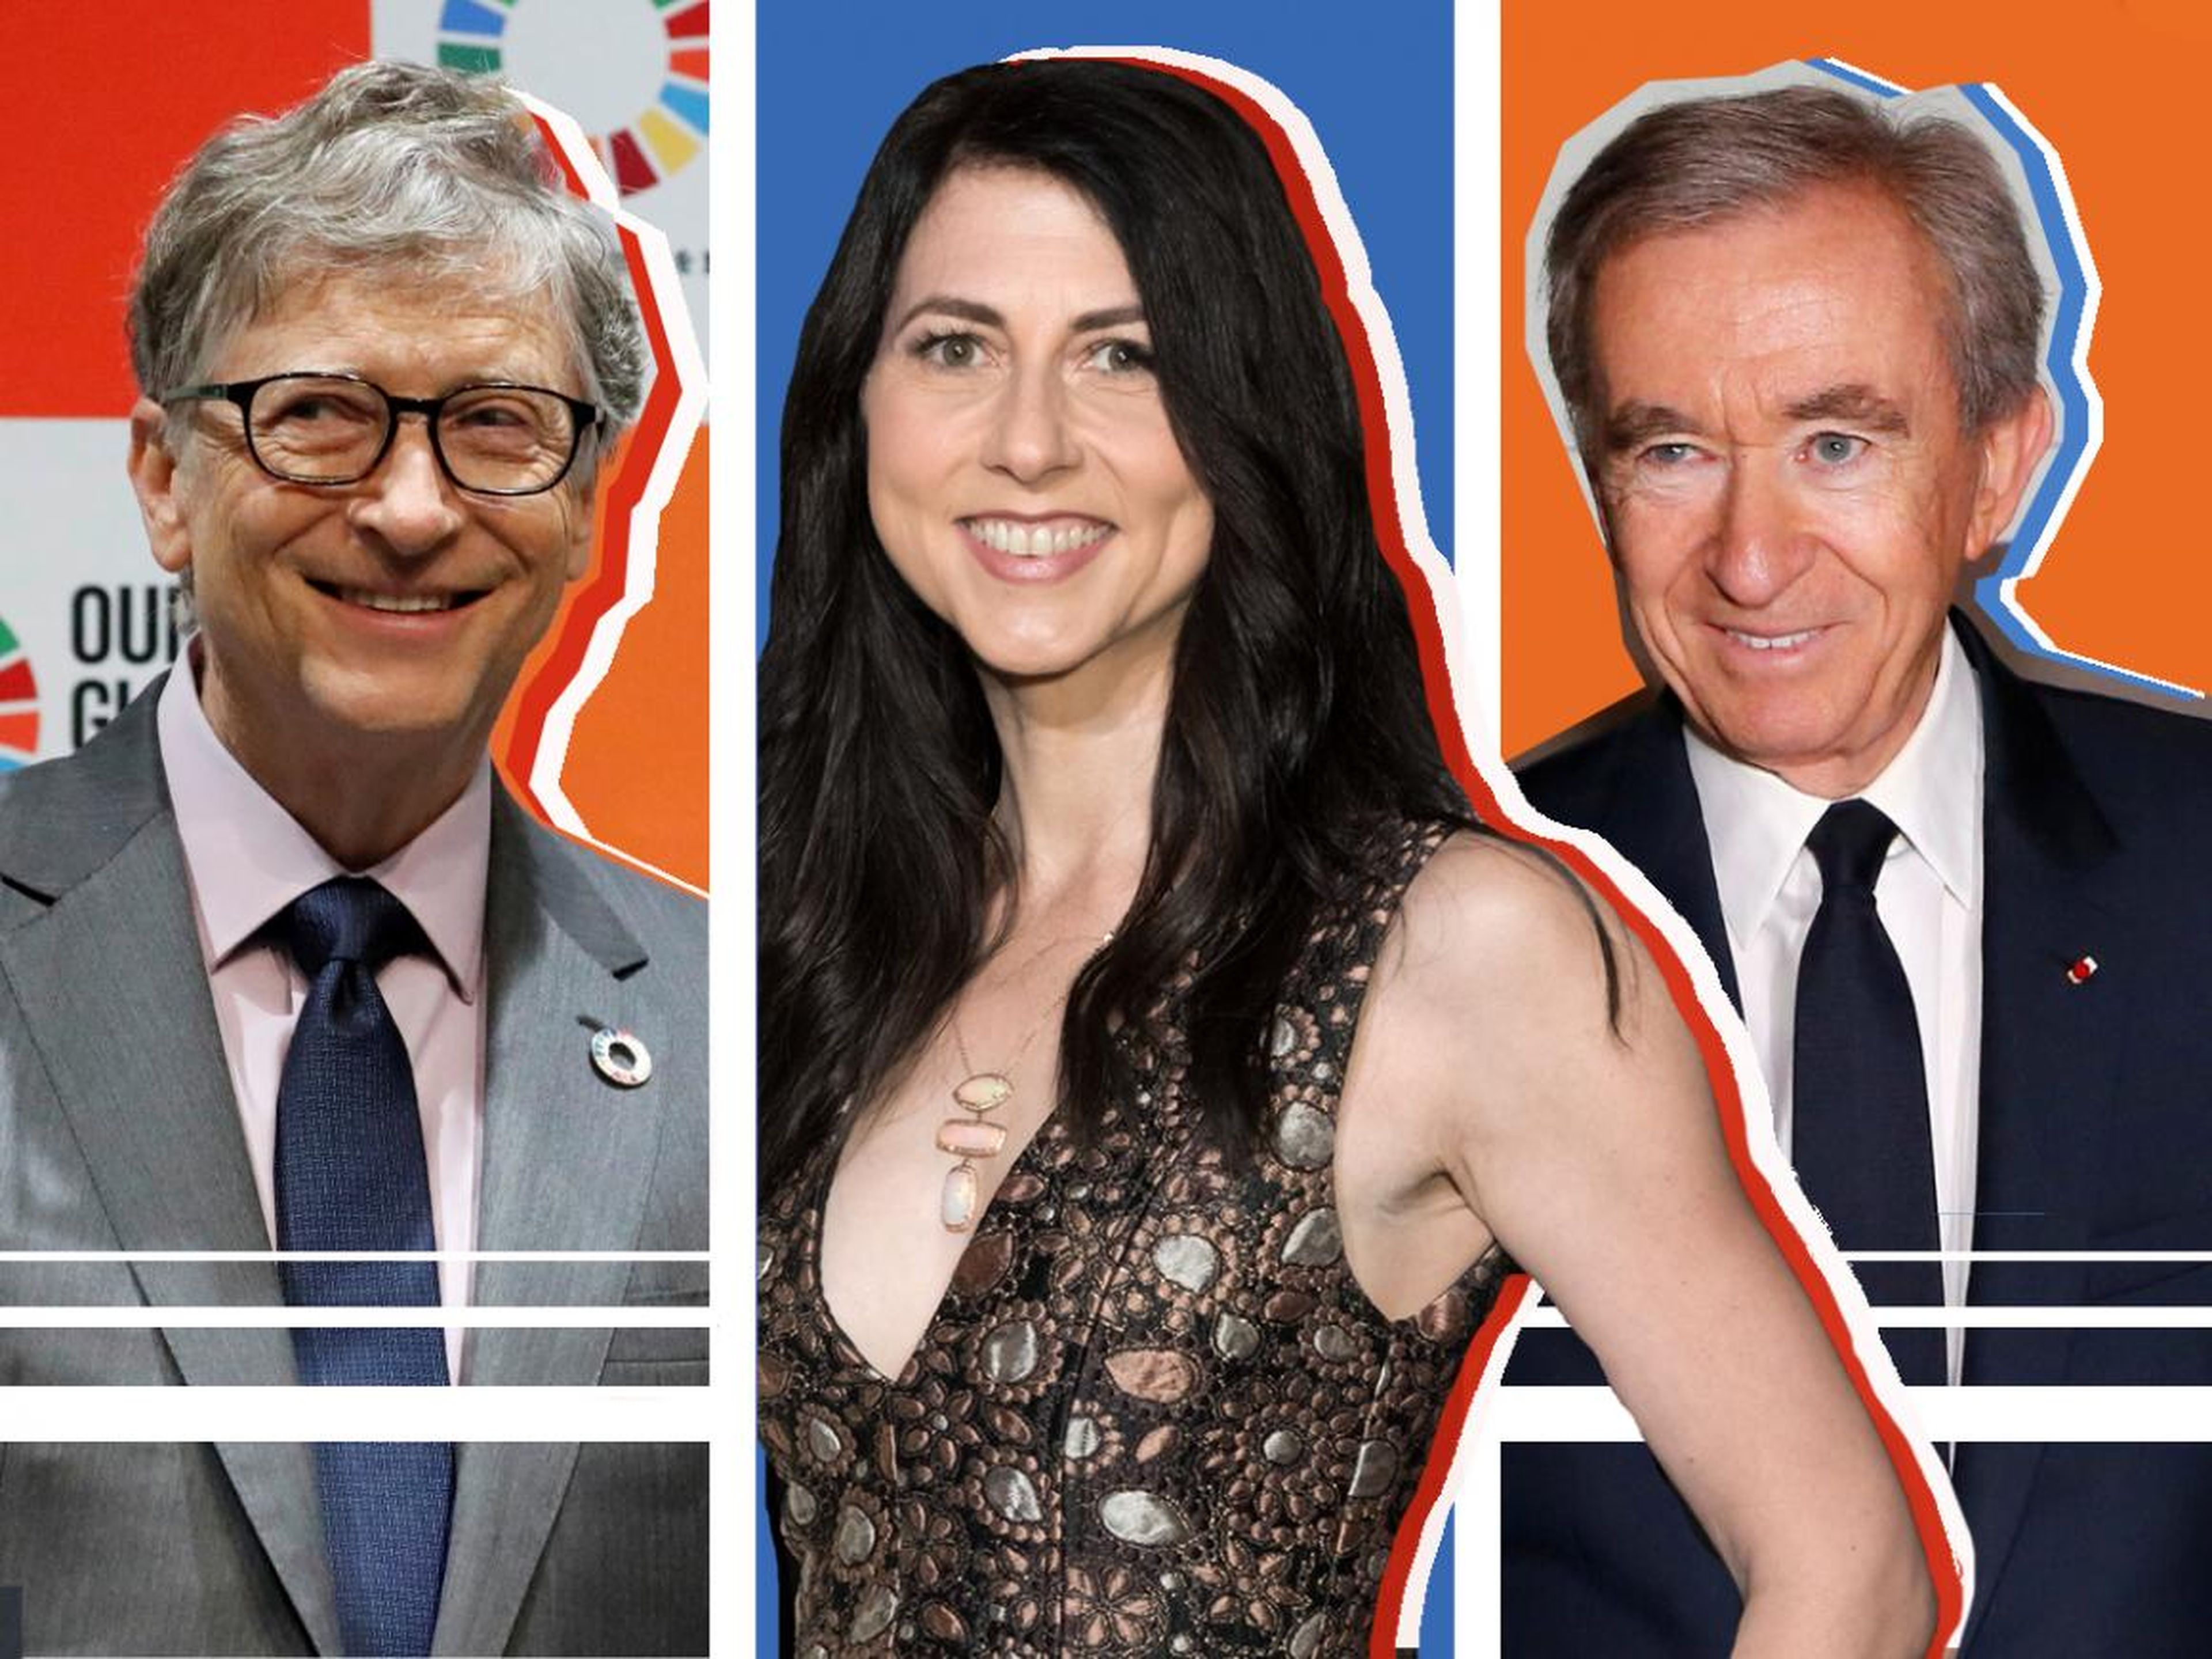 Bill Gates, MacKenzie Bezos, and Bernard Arnault each added more than $20 billion to their net worths in 2019.